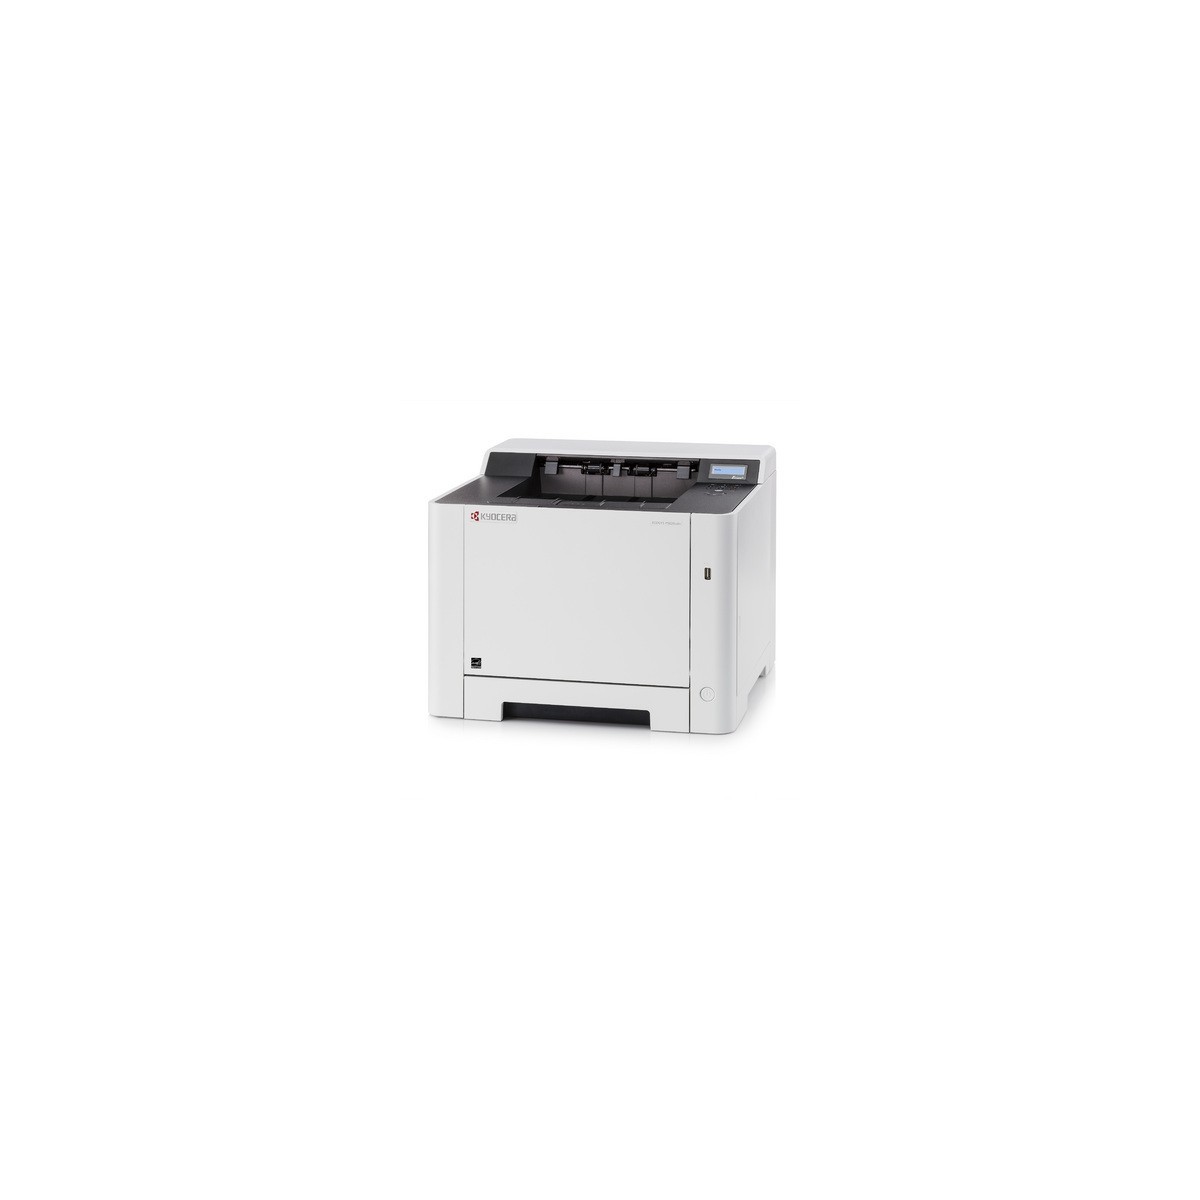 Kyocera ECOSYS P5026cdn - Laser - Colour - 9600 x 600 DPI - A4 - 26 ppm - Duplex printing